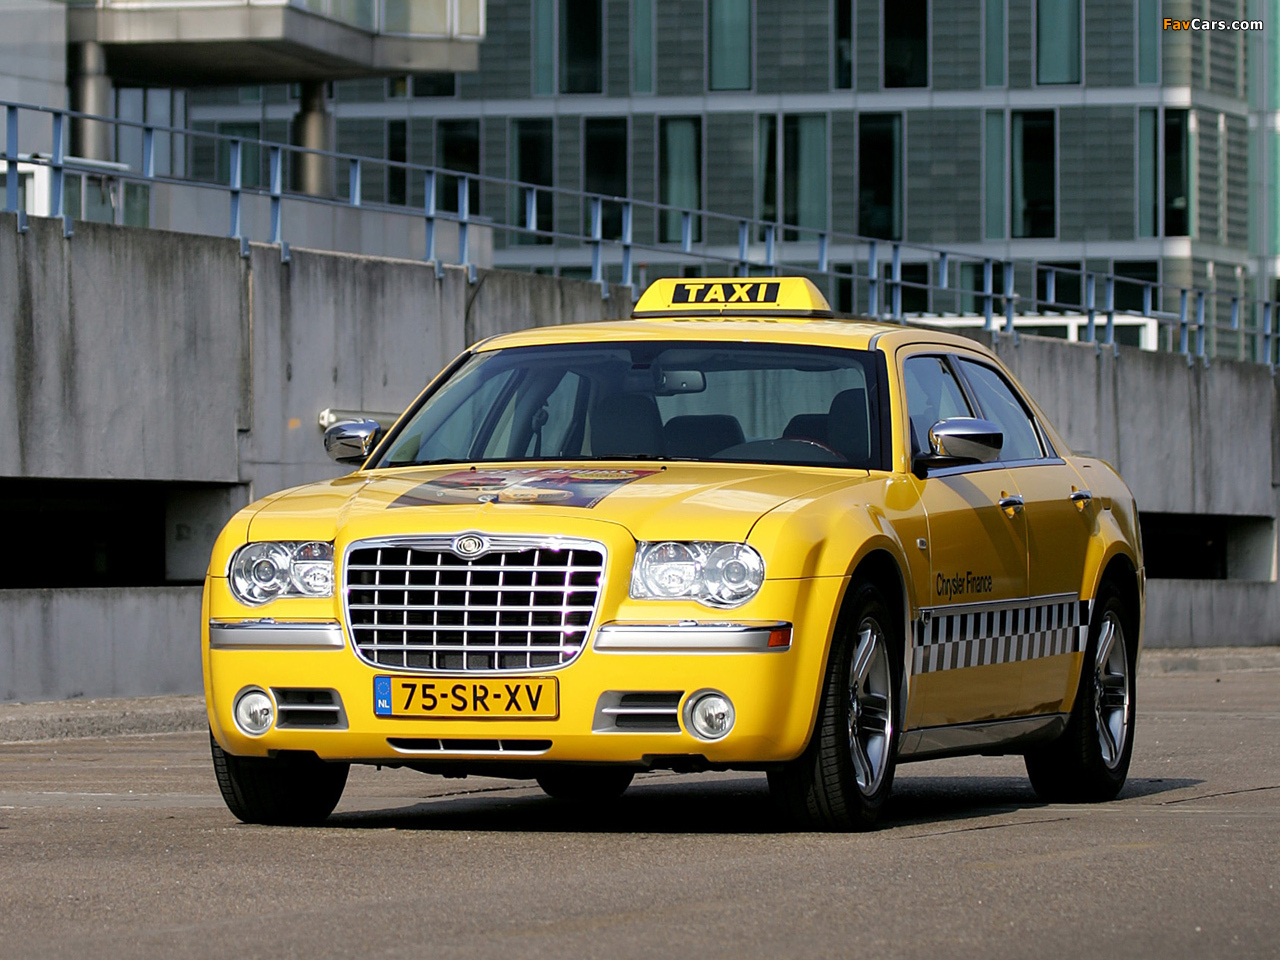 Такси мгу. Chrysler 300c Taxi. Chrysler 300 Taxi. Крайслер 300 с такси. Chrysler 300 NYC Taxi.